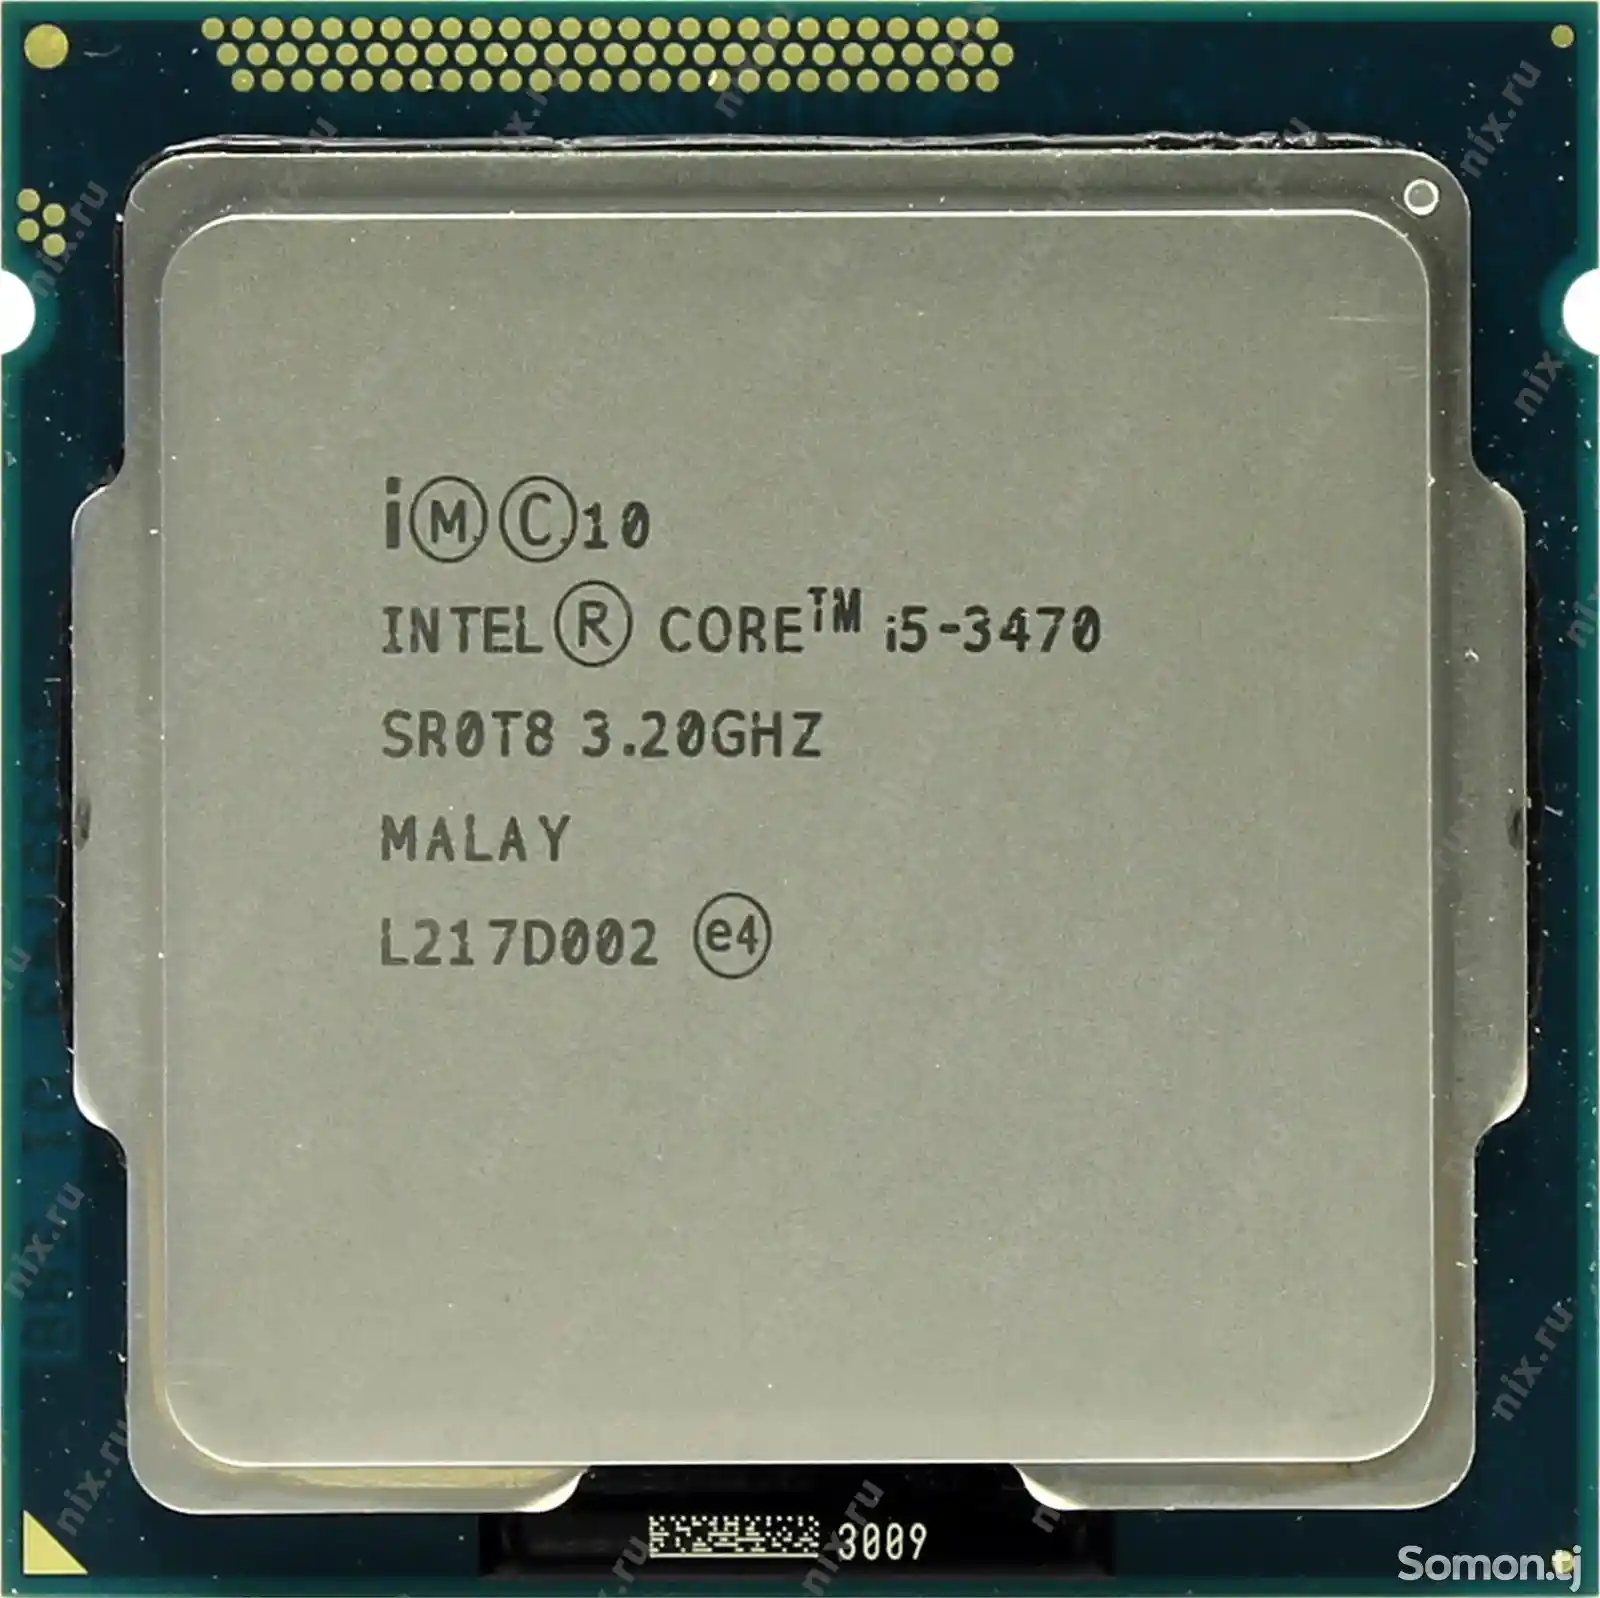 Intel core i5 3470